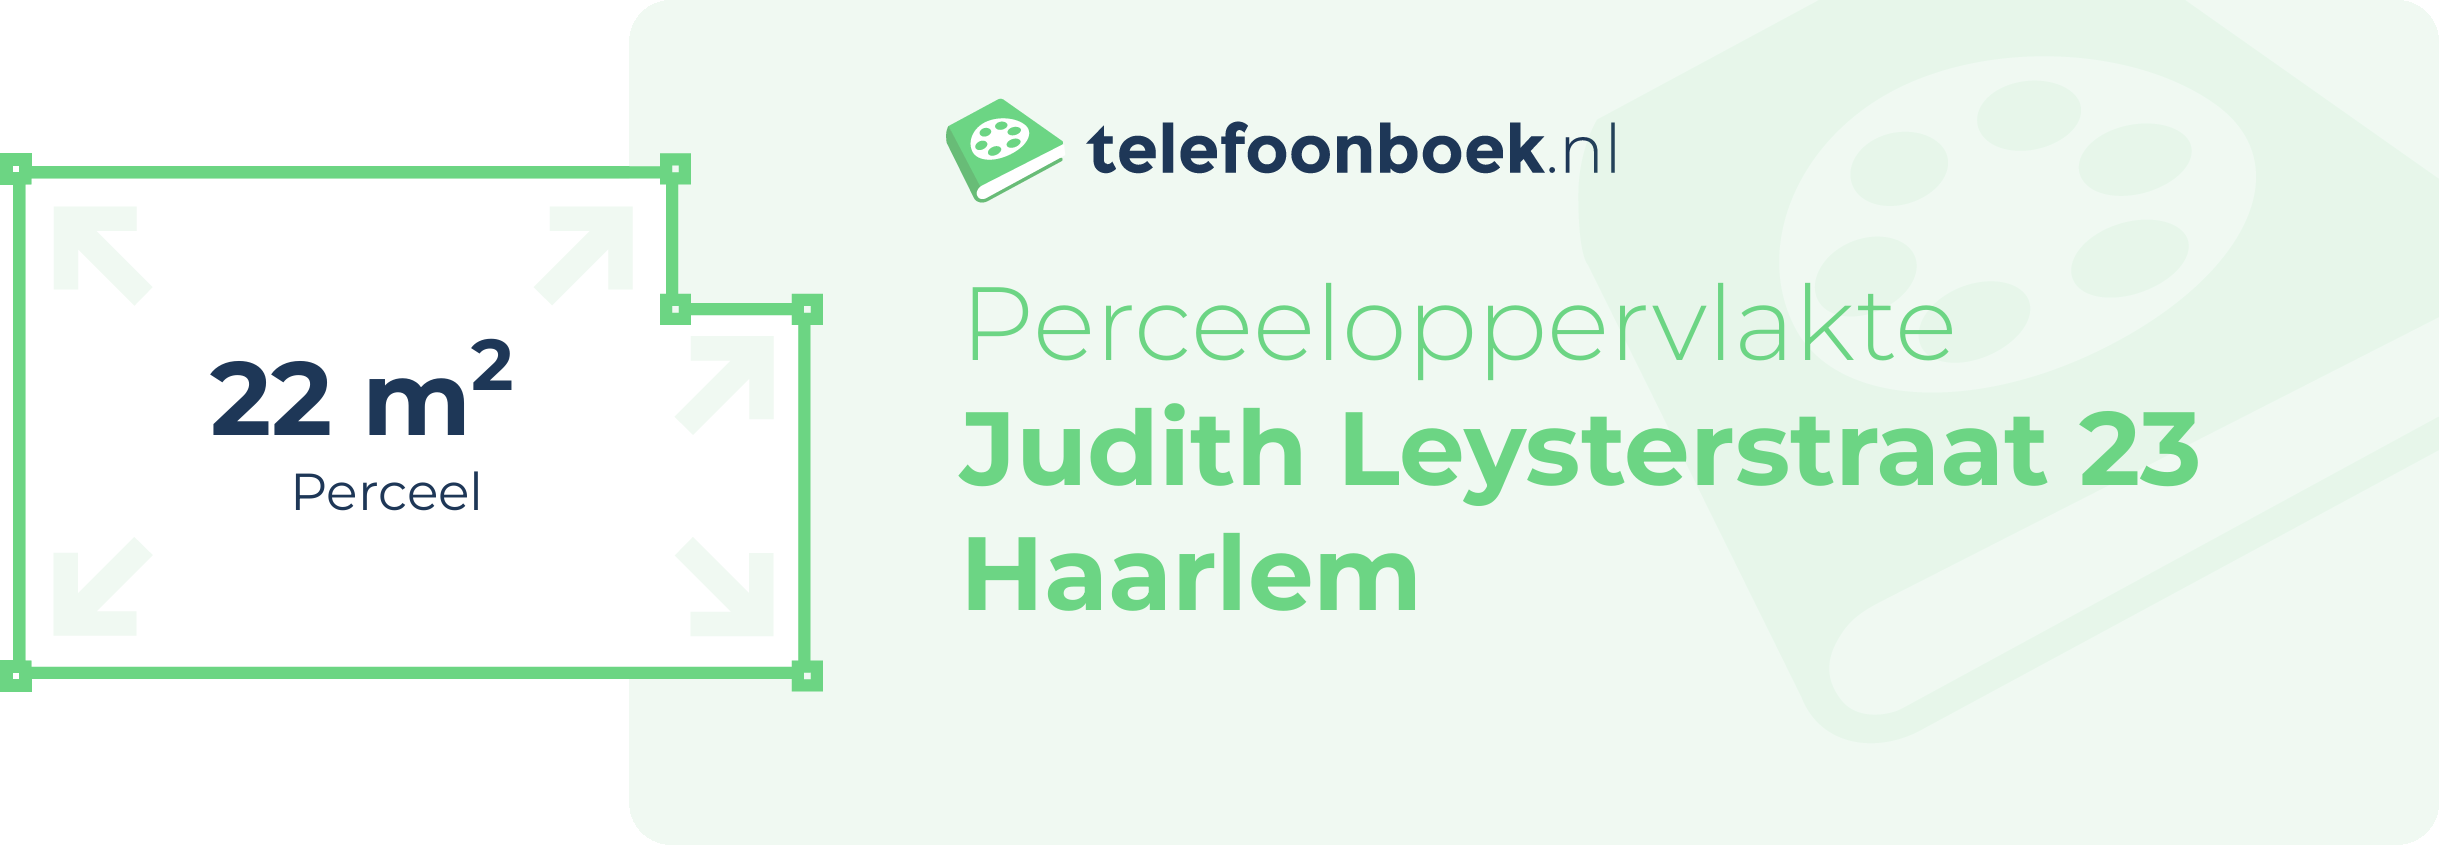 Perceeloppervlakte Judith Leysterstraat 23 Haarlem